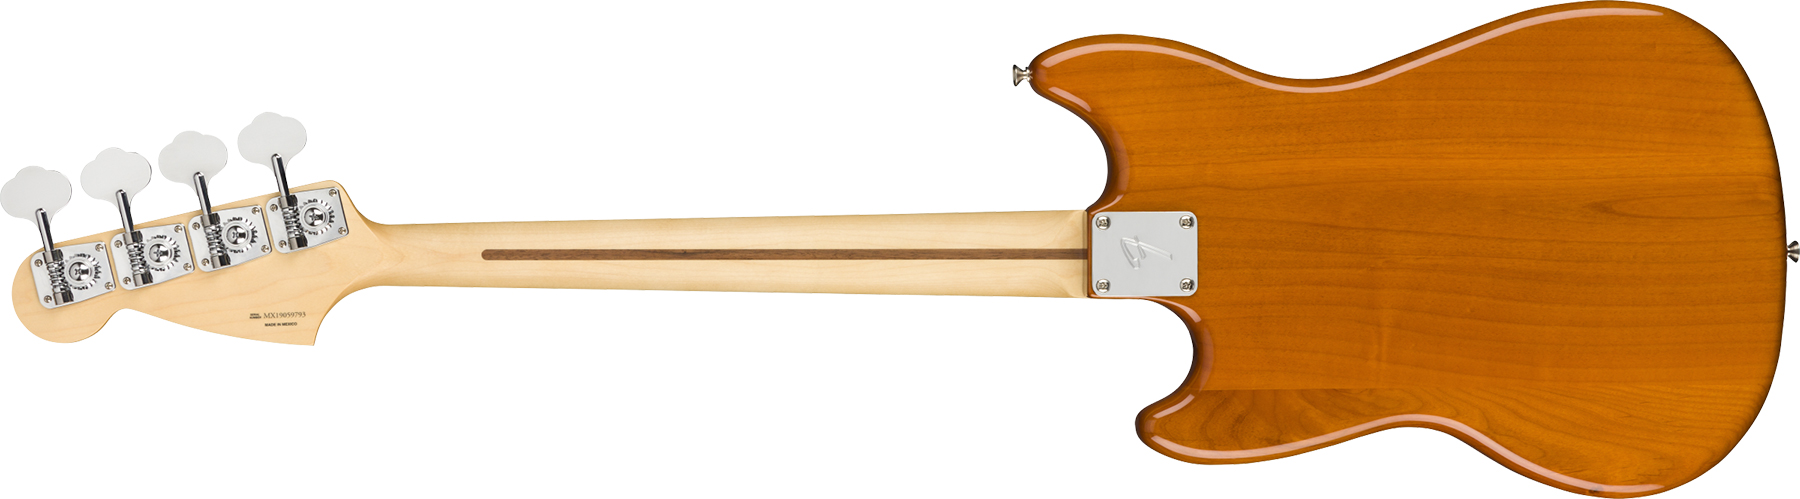 Fender Player Mustang Bass Pj Mex Pf - Aged Natural - Bajo eléctrico para niños - Variation 2